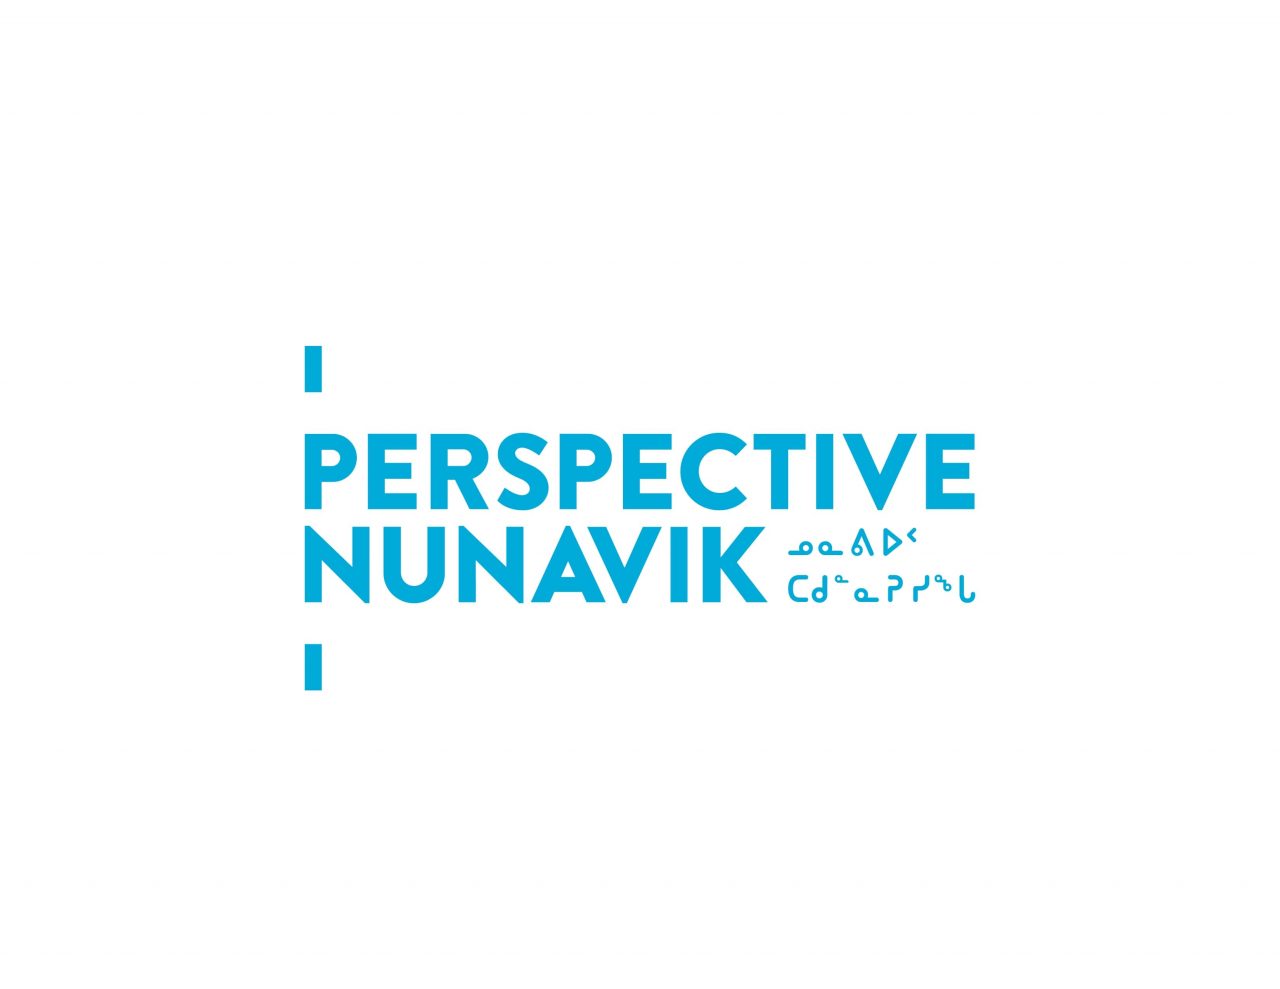 Perspective Nunavik